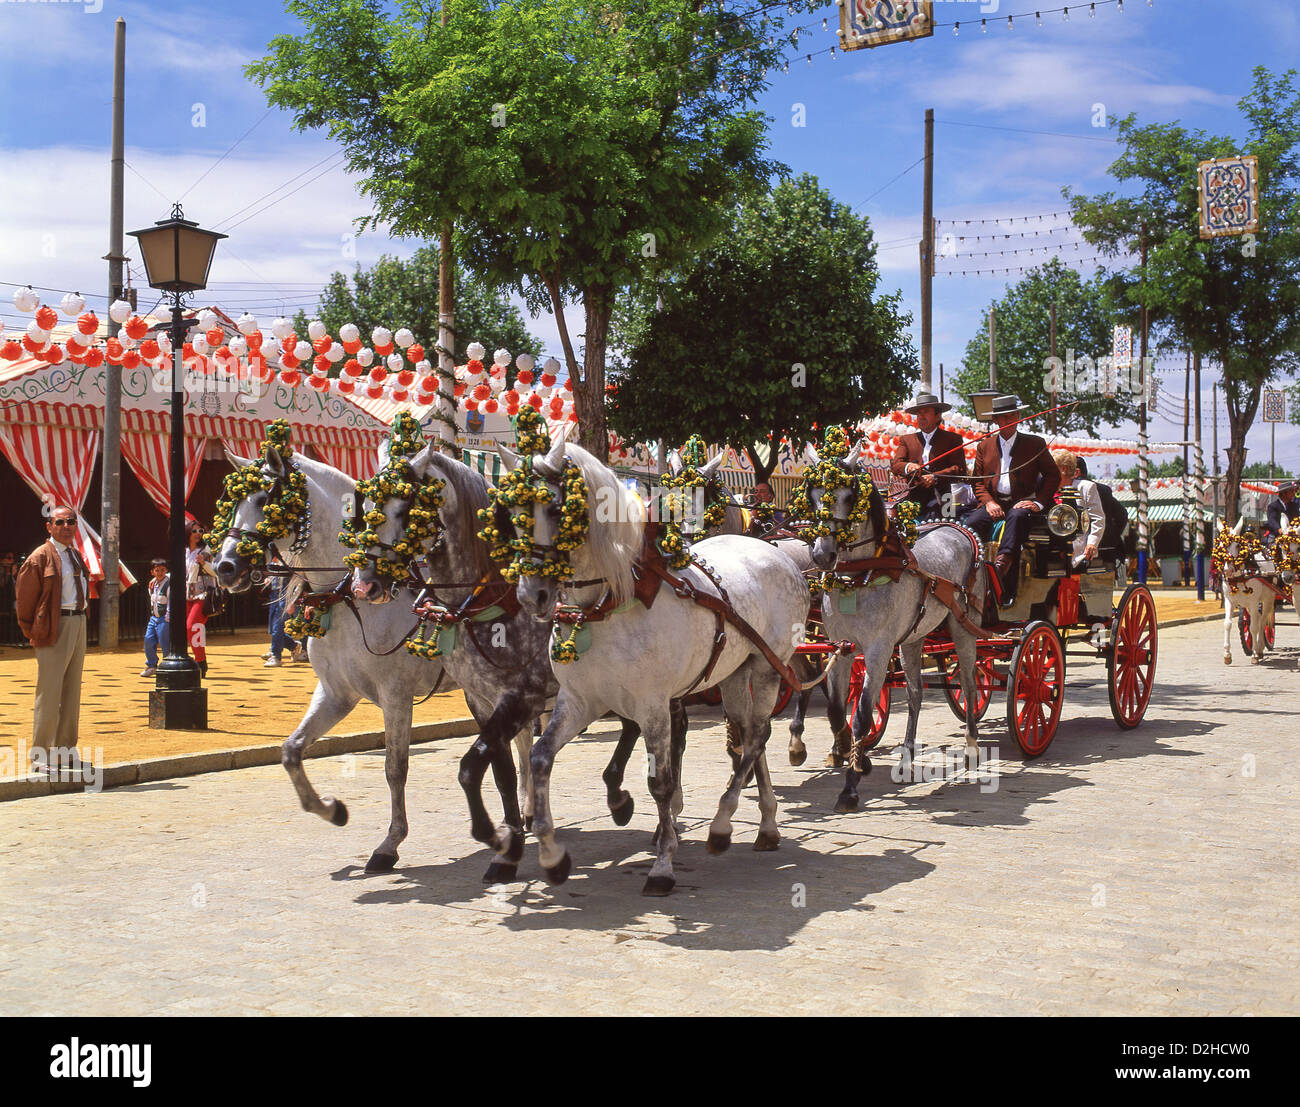 Dekorierte Pferdekutsche auf der Feria de Abril de Sevilla (Sevilla April Fair), Sevilla, Provinz Sevilla, Andalusien, Spanien Stockfoto